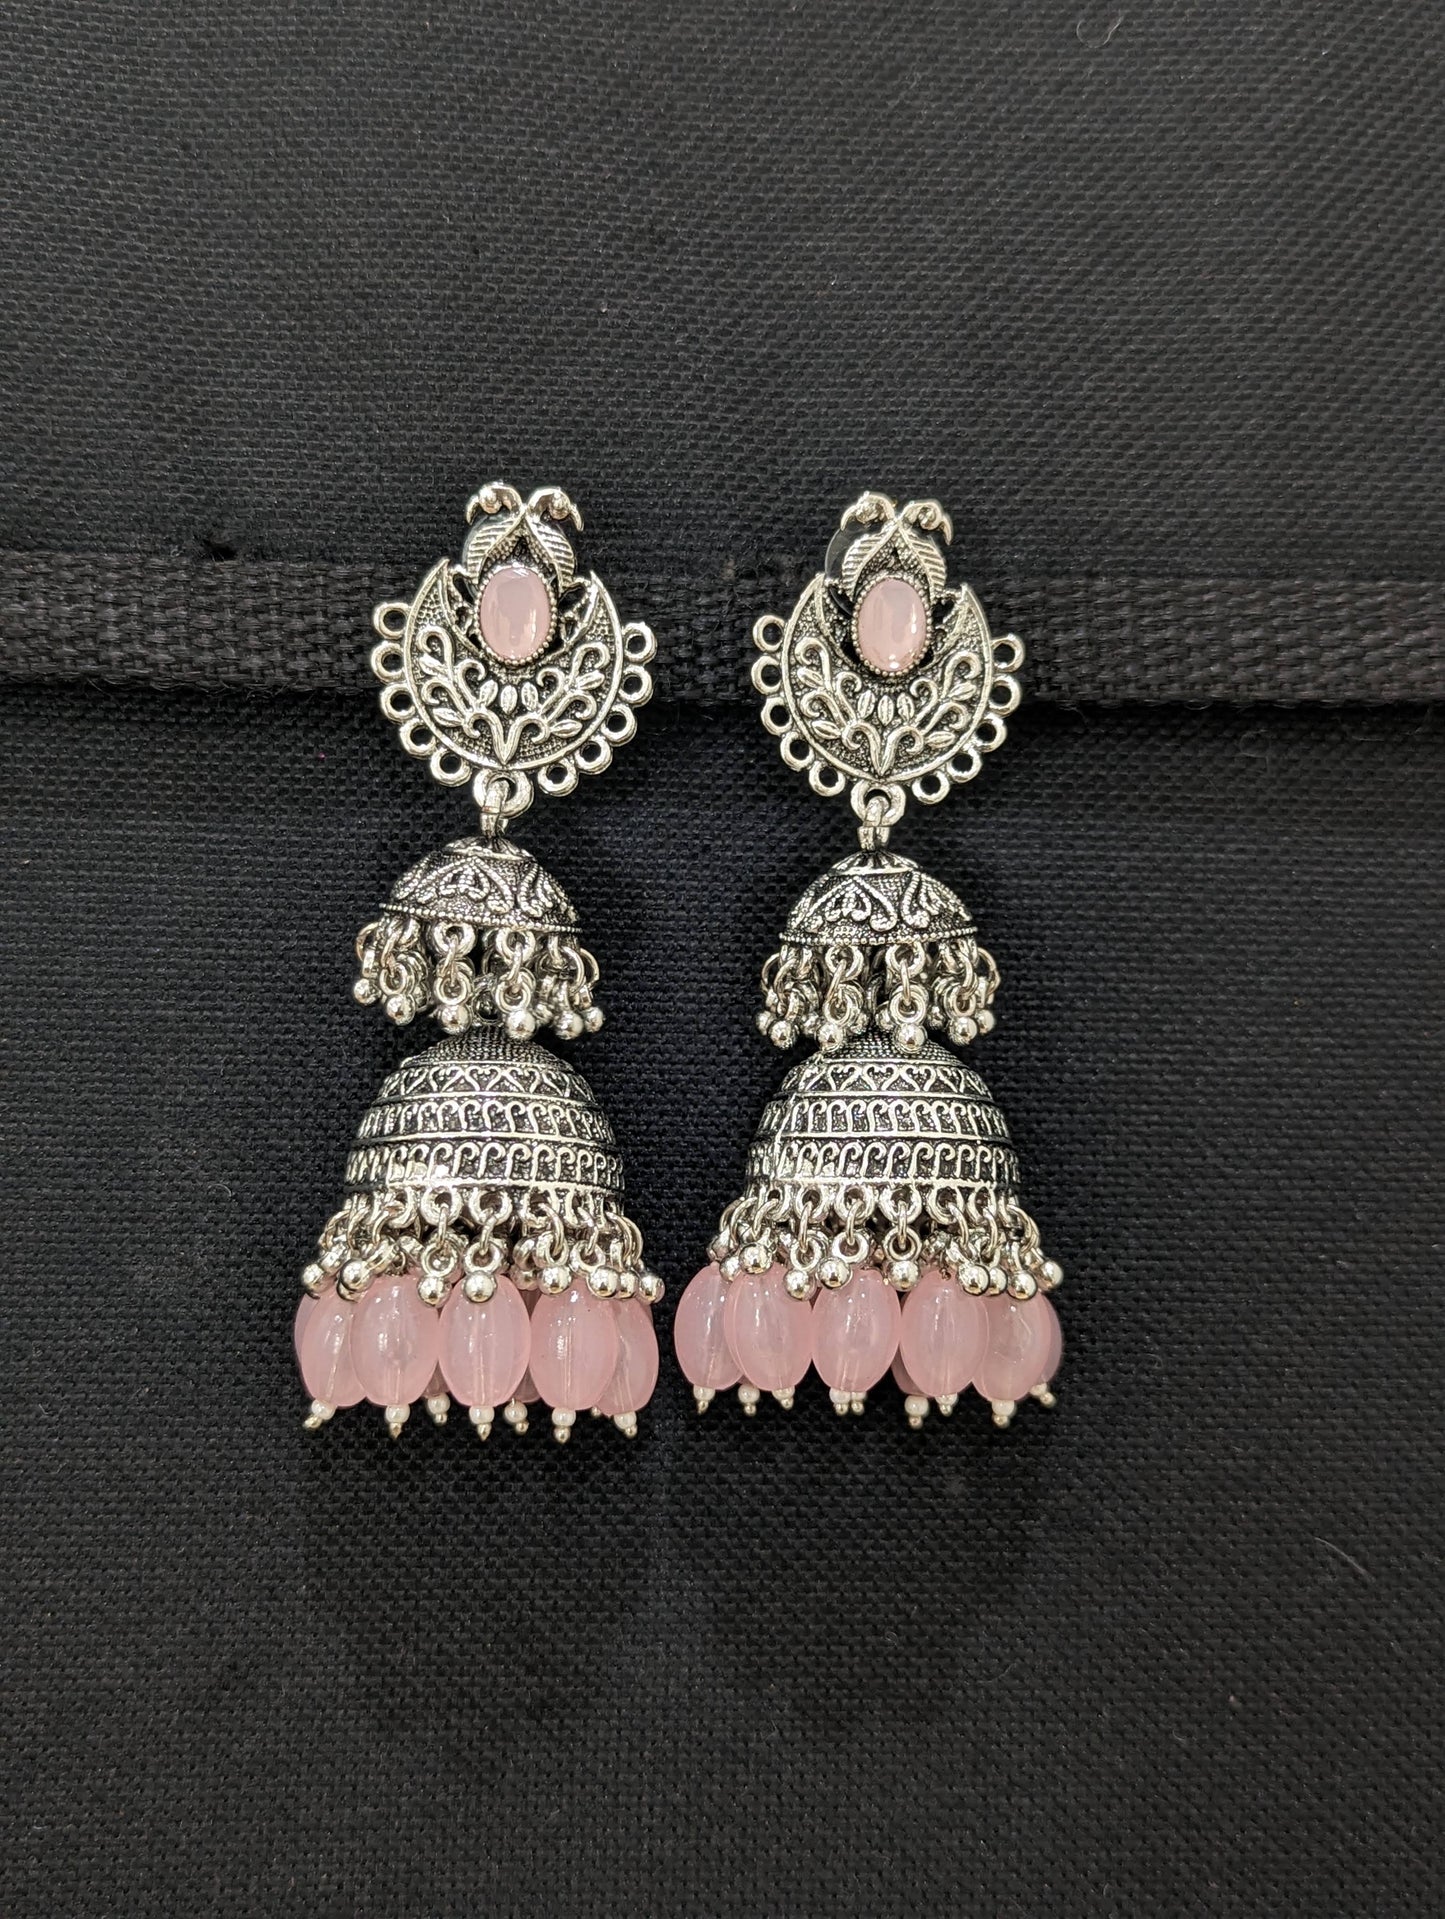 Oxidized silver Dual layer Jhumka earrings